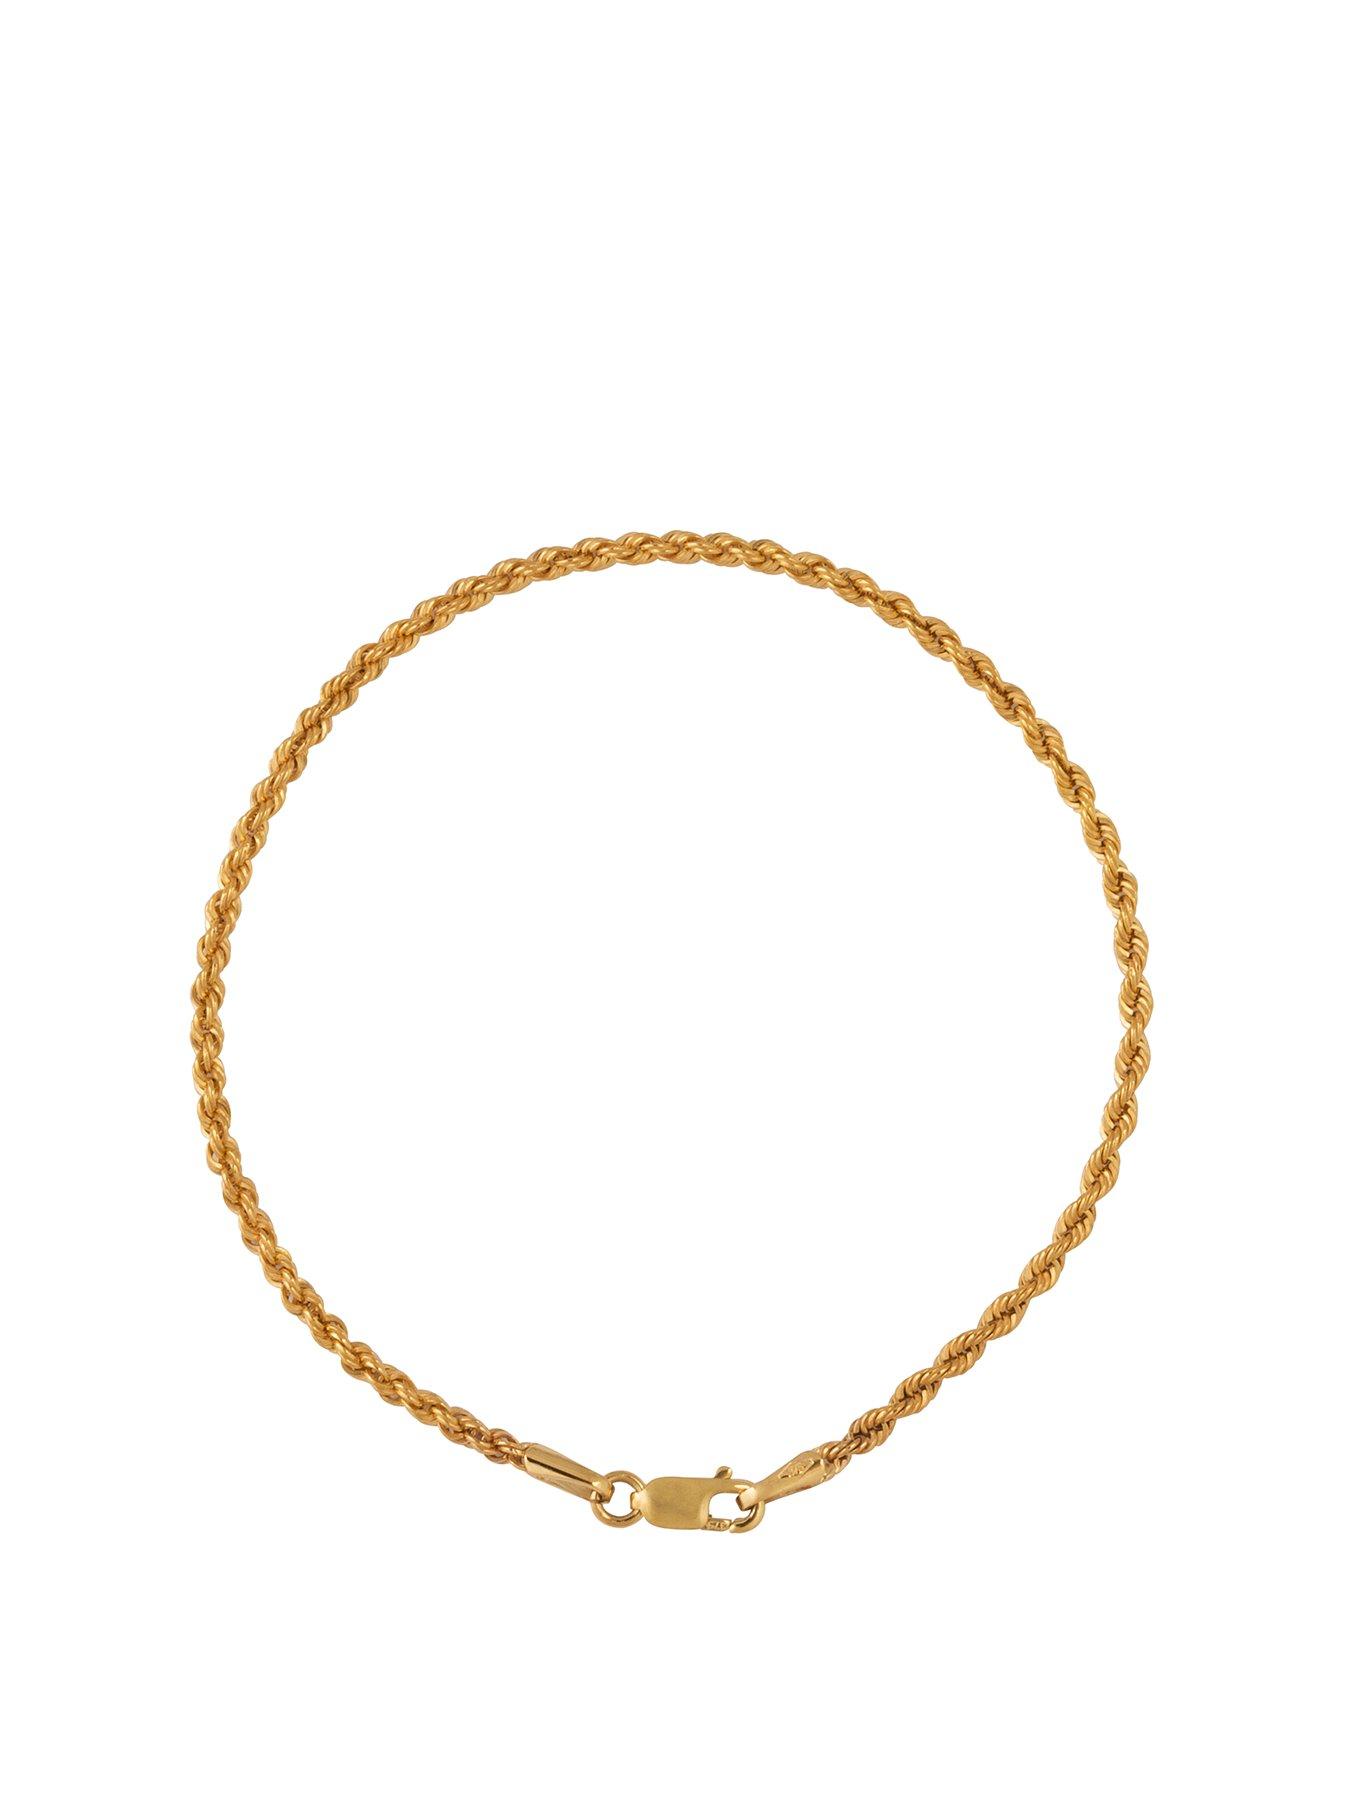  9ct Gold 19cm rope chain bracelet